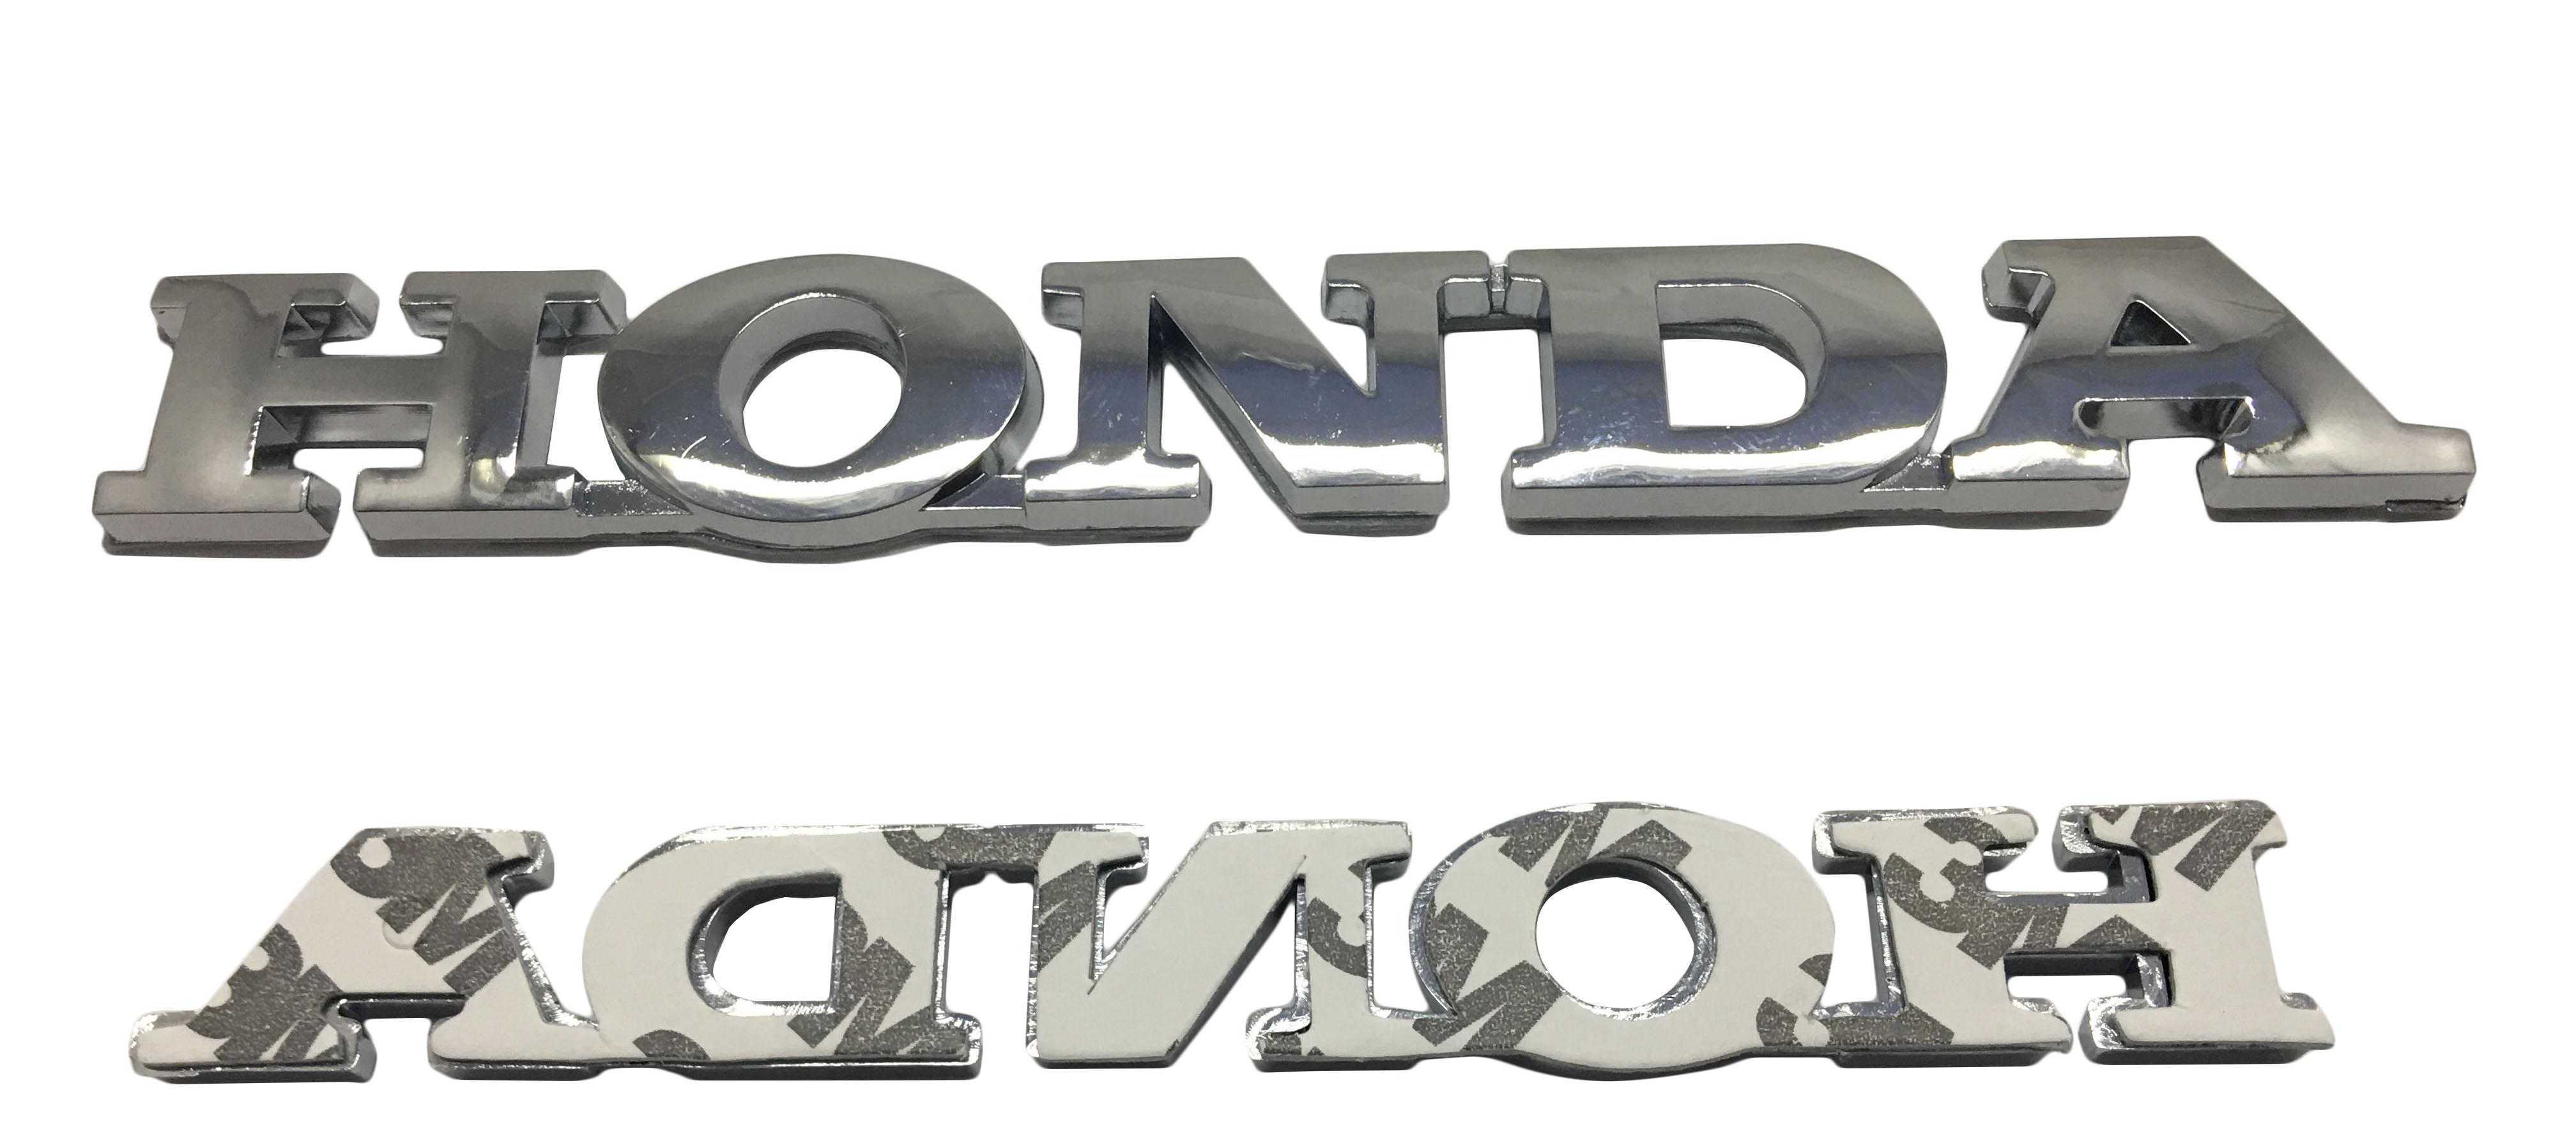 Emblemat napis HONDA chromowany na tył na karoserię